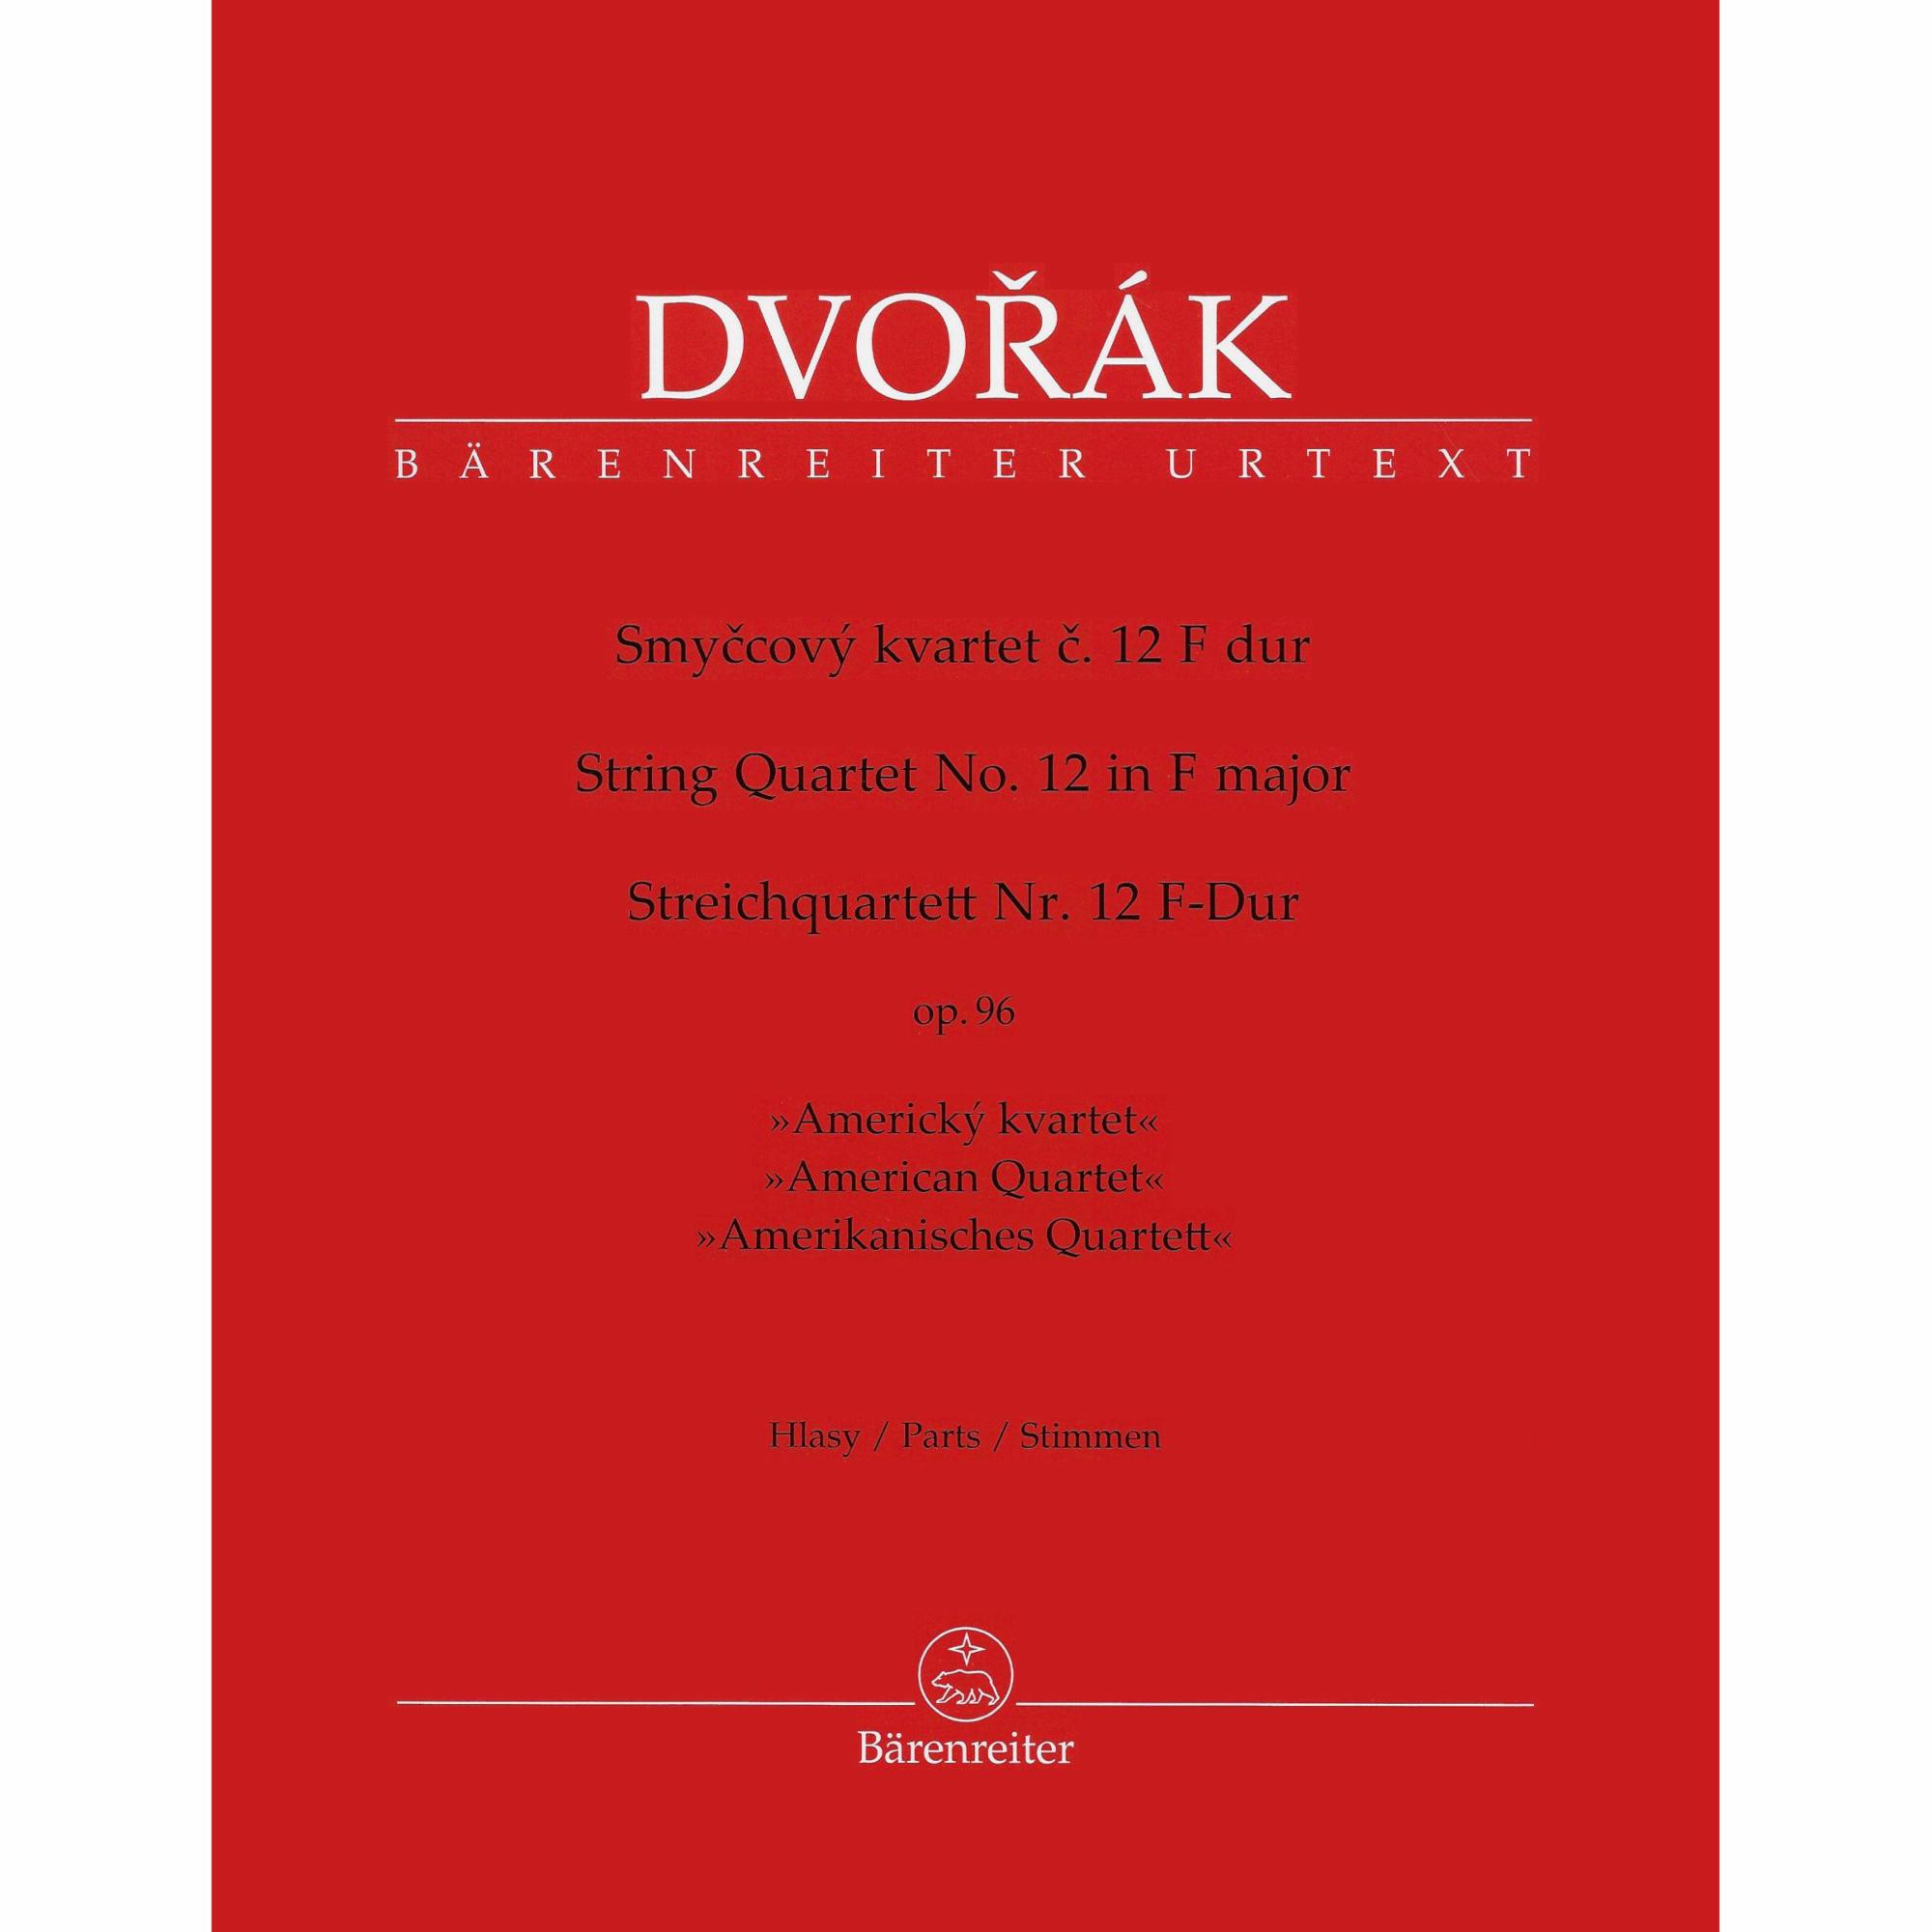 Dvorak -- String Quartet No. 12 in F Major, Op. 96 (American)